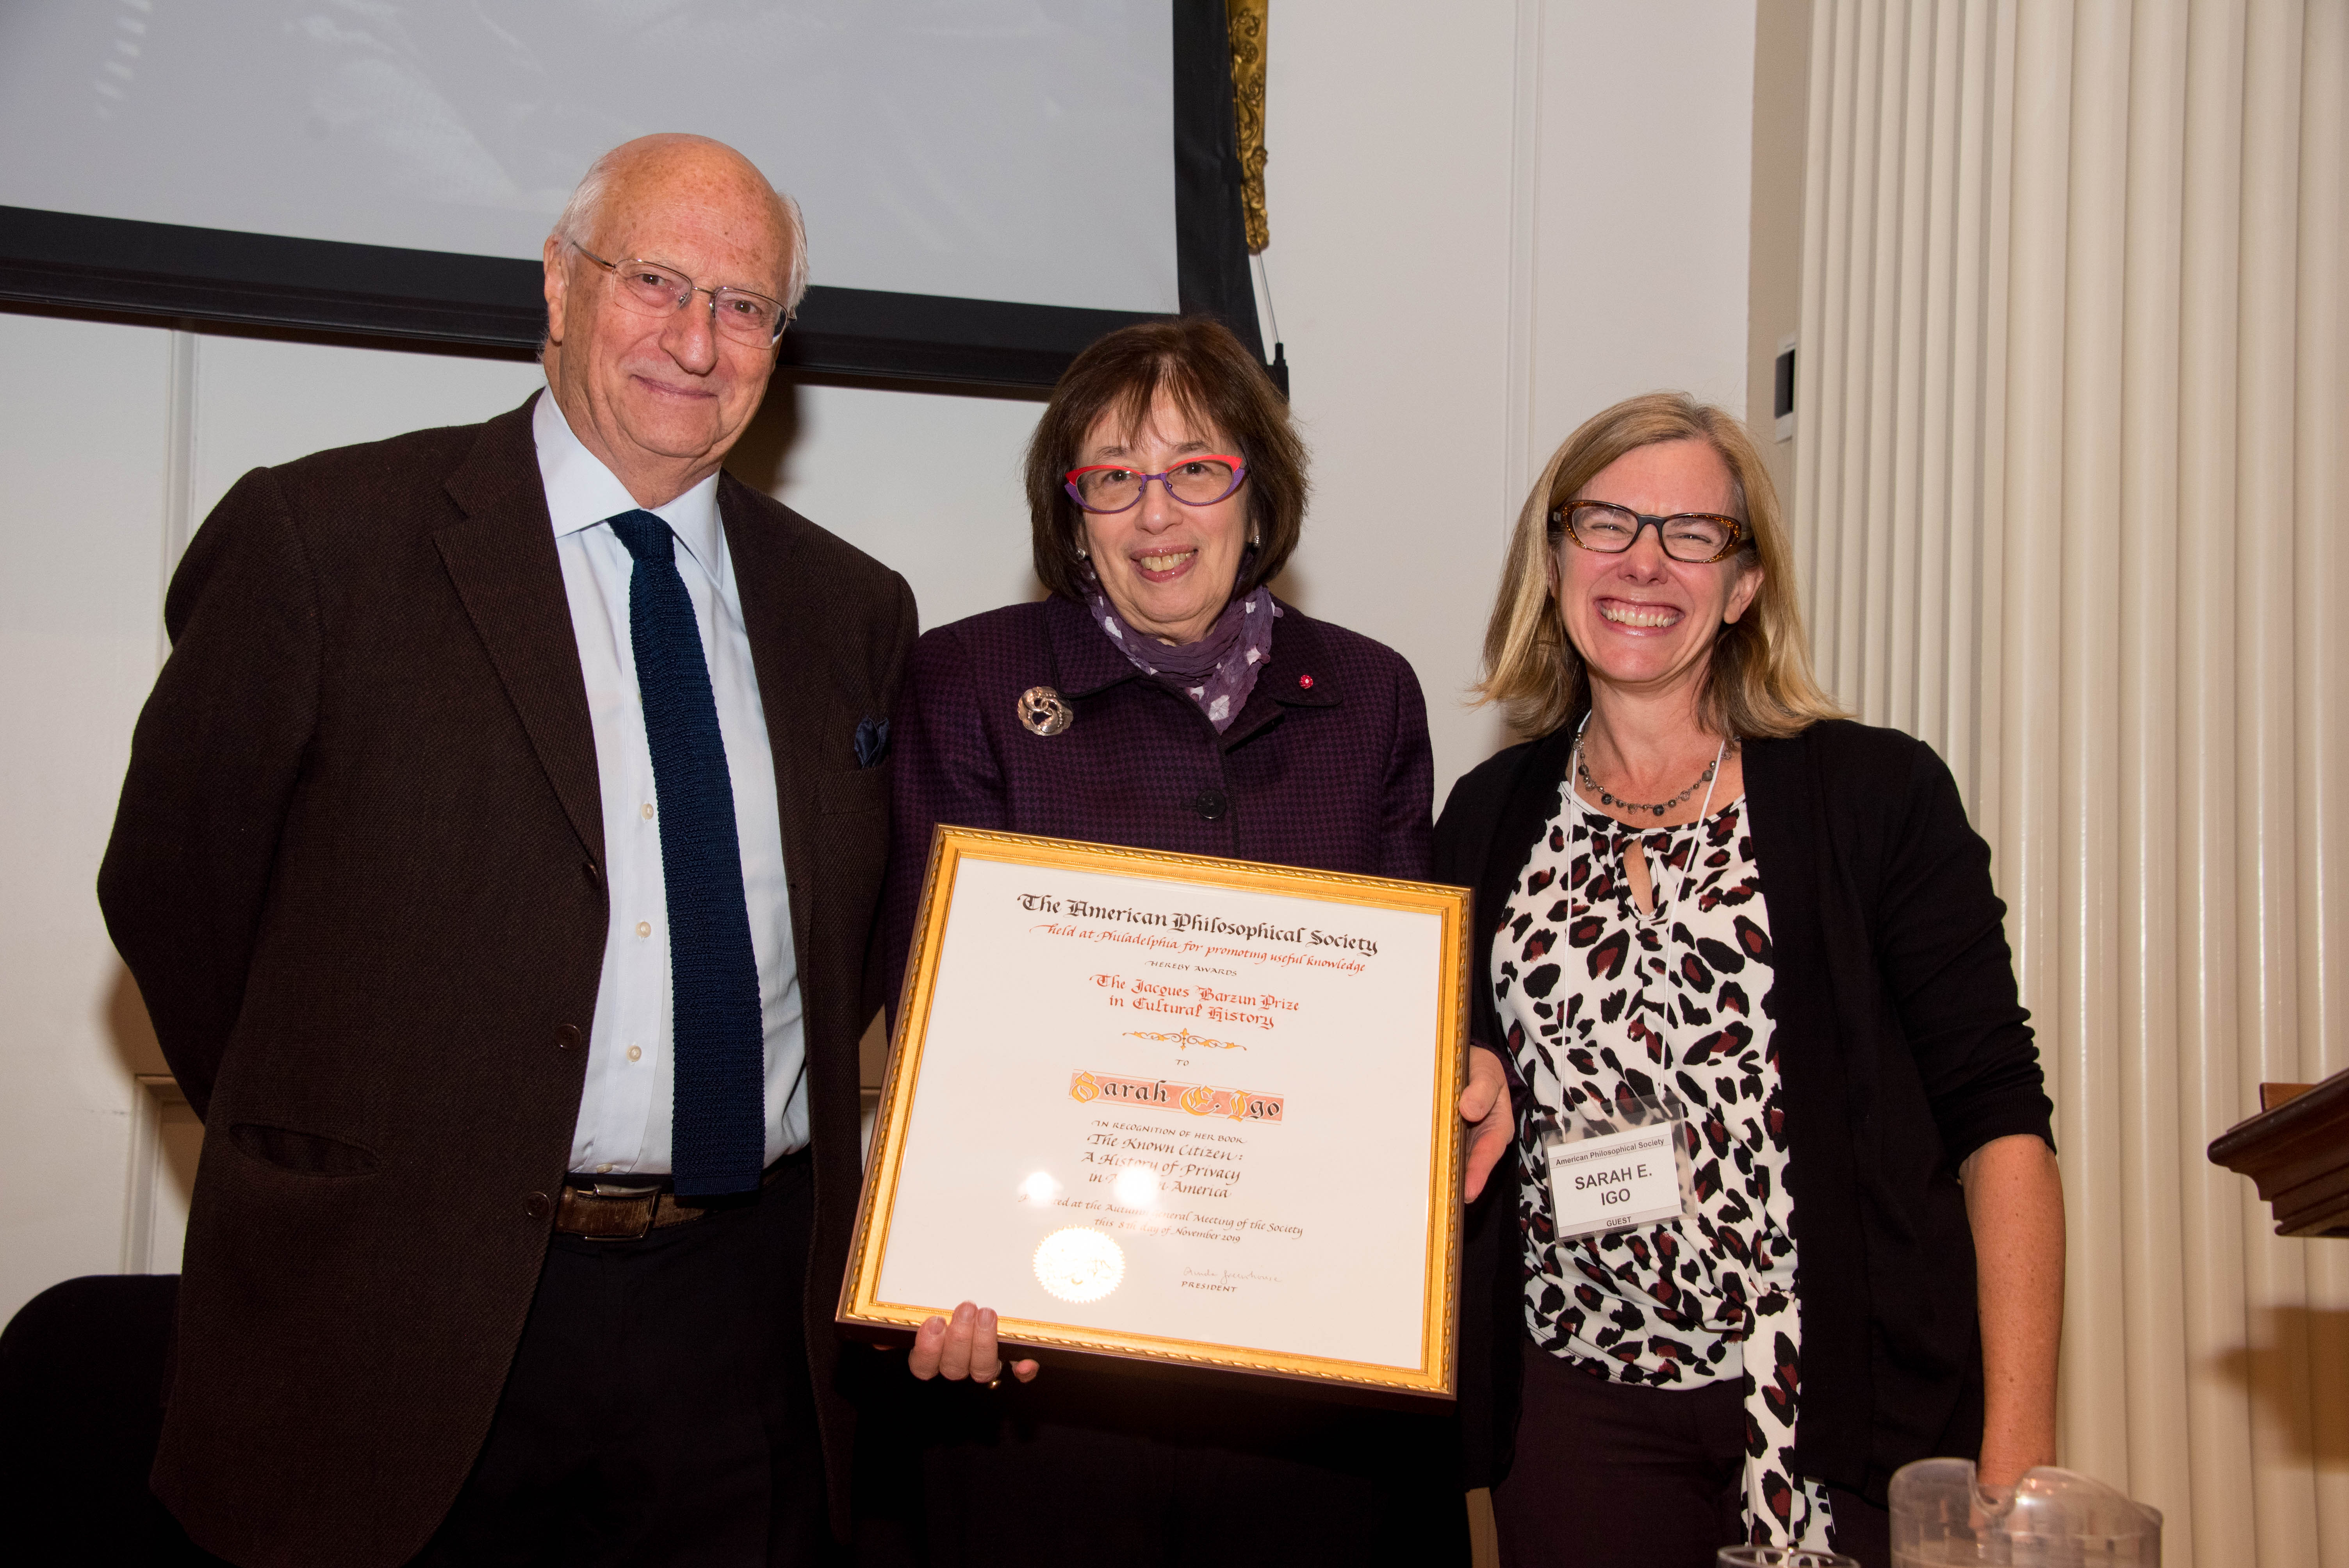 Linda Greenhouse holds the Jacques Barzun Prize certificate, between Michael Wood and Sarah Igo